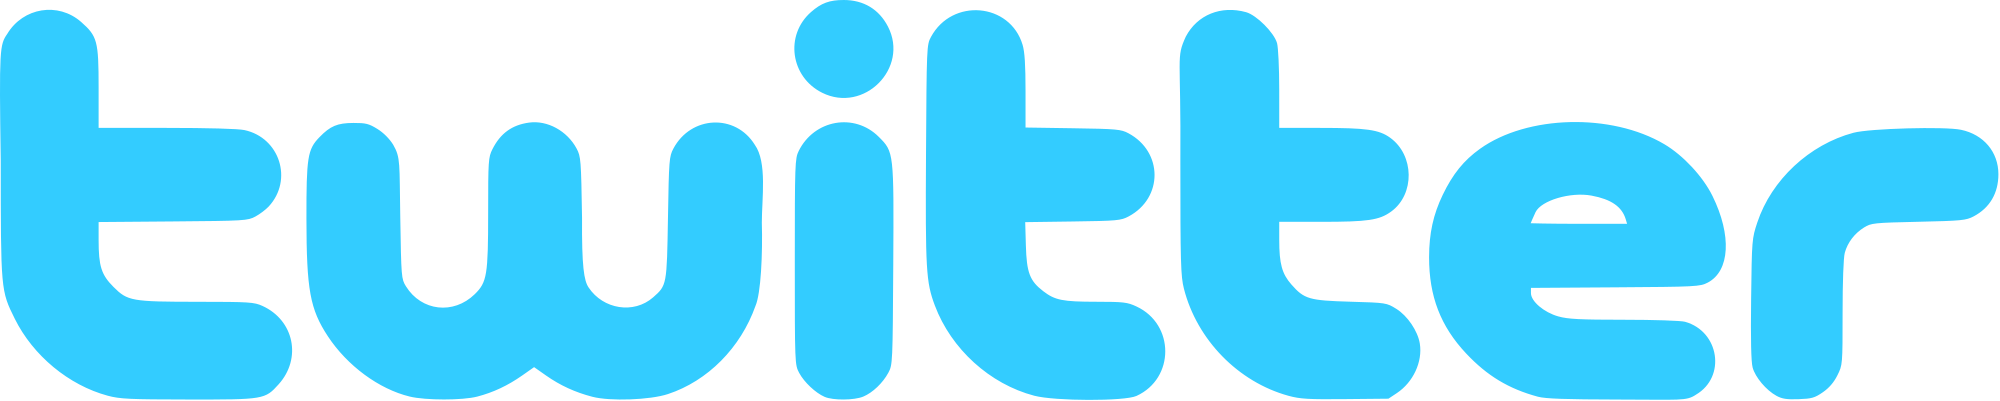 2000px-Twitter_logo.svg.png